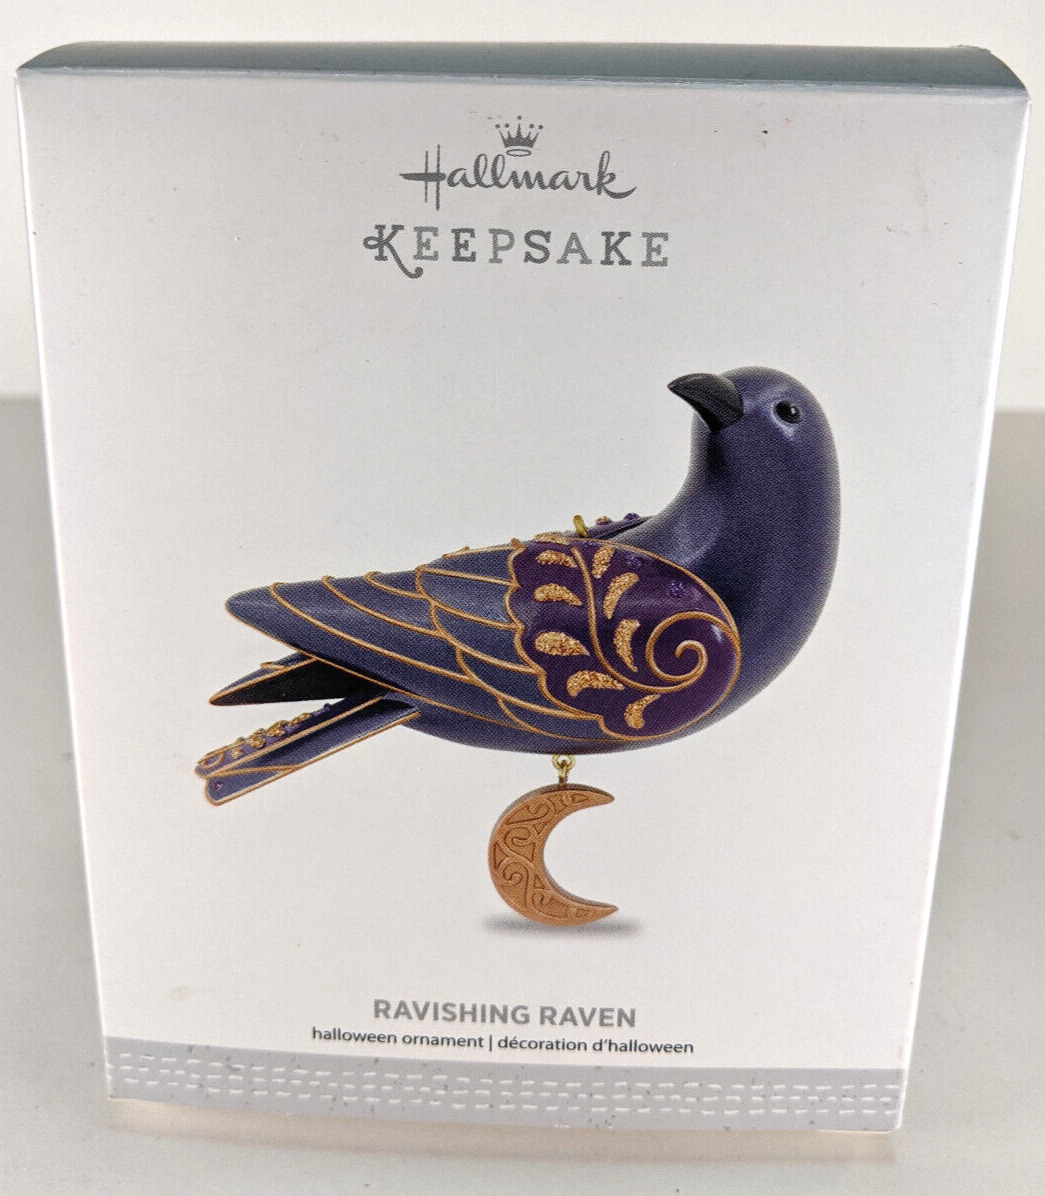 Hallmark Keepsake 2017 Ravishing Raven Ornament